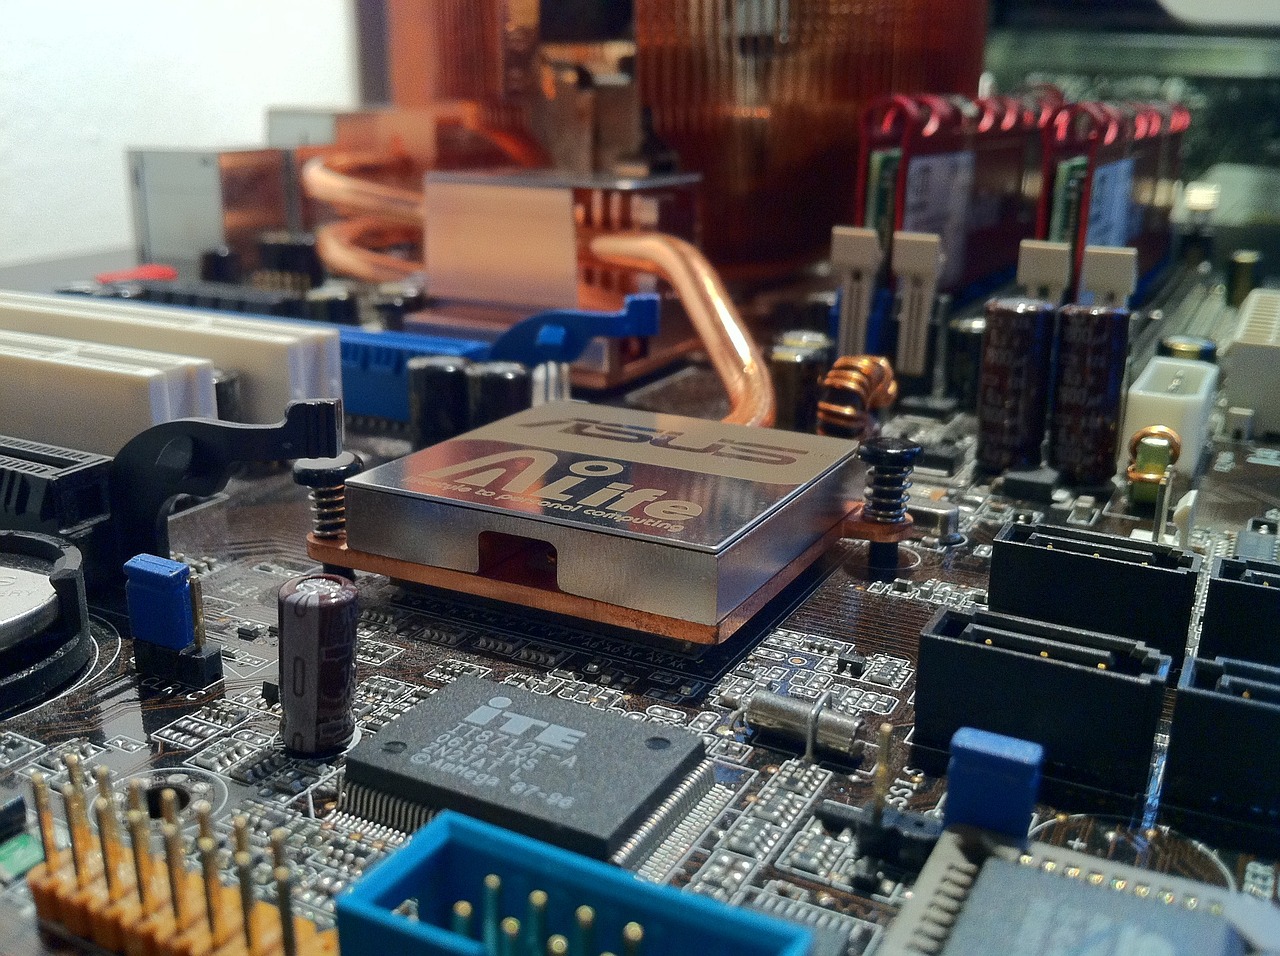 motherboard of a computer. technology, high tech